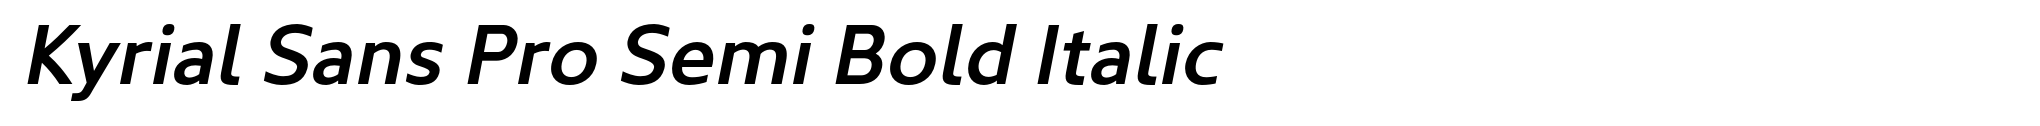 Kyrial Sans Pro Semi Bold Italic image